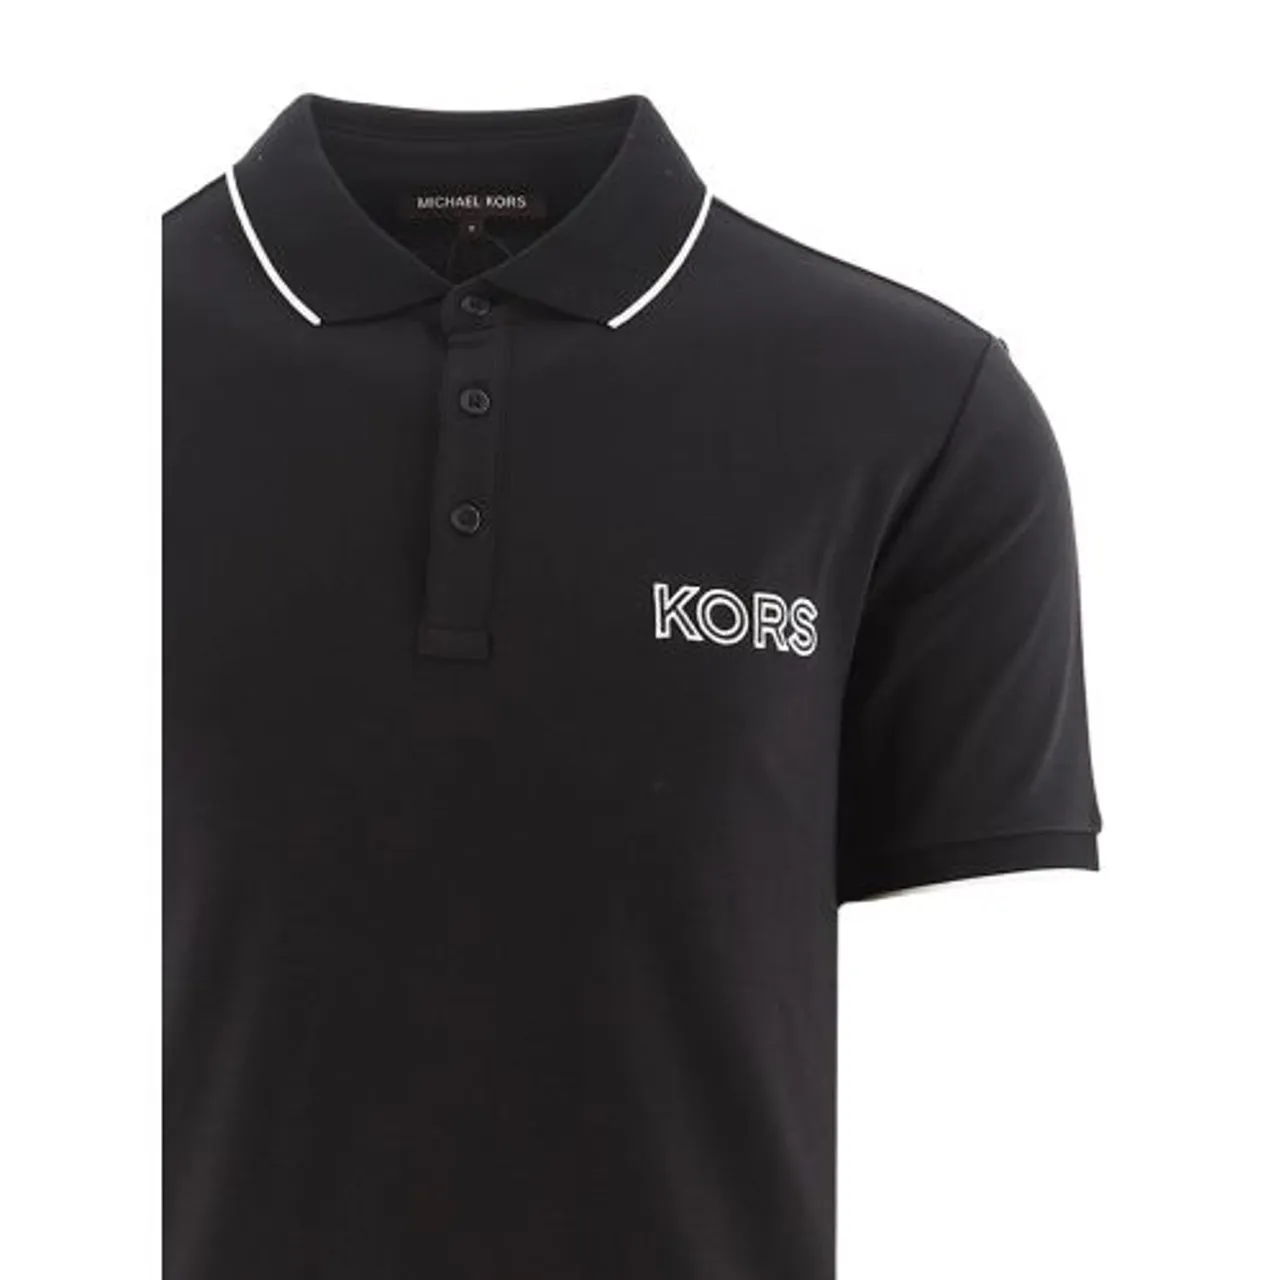 Michael Kors Black Chest Logo Tipped Polo Shirt